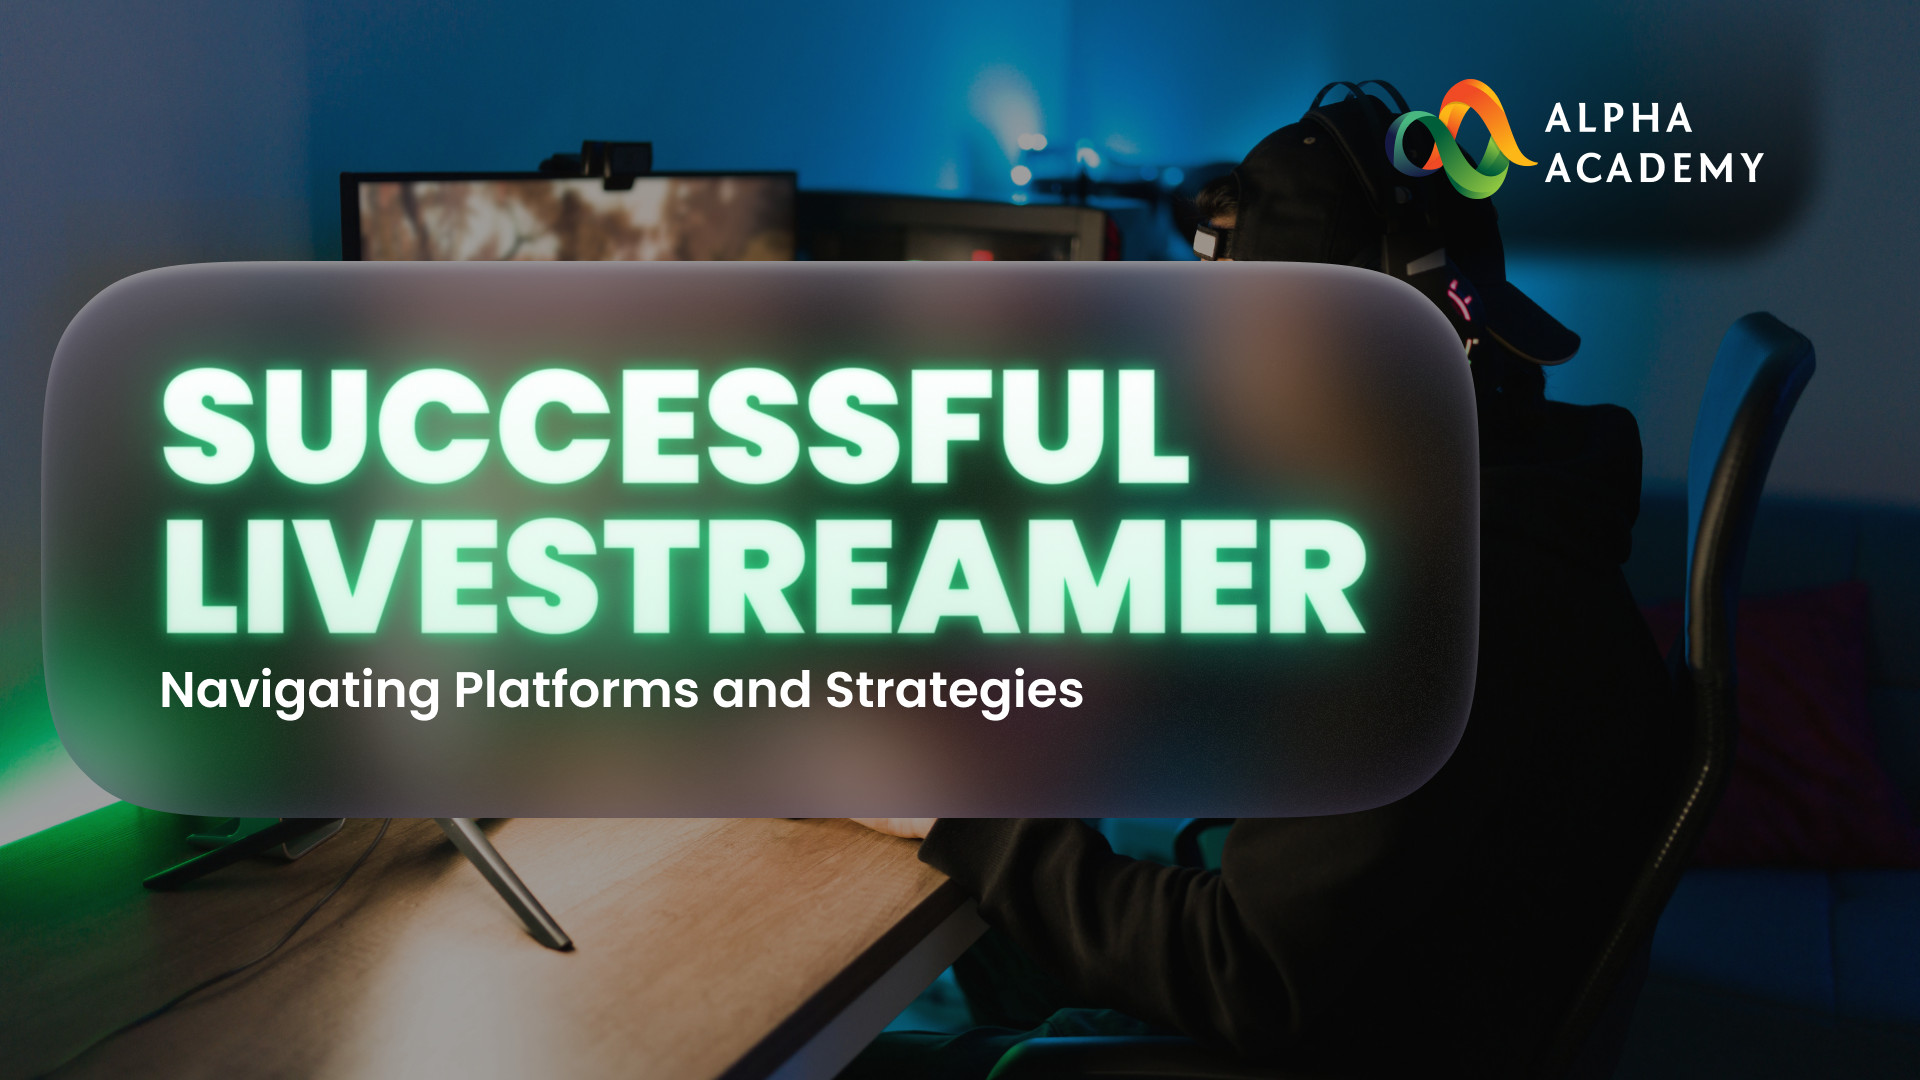 Successful Live streamer: Navigating Platforms and Strategies eLearning Bundle Alpha Academy Code 11.28 usd